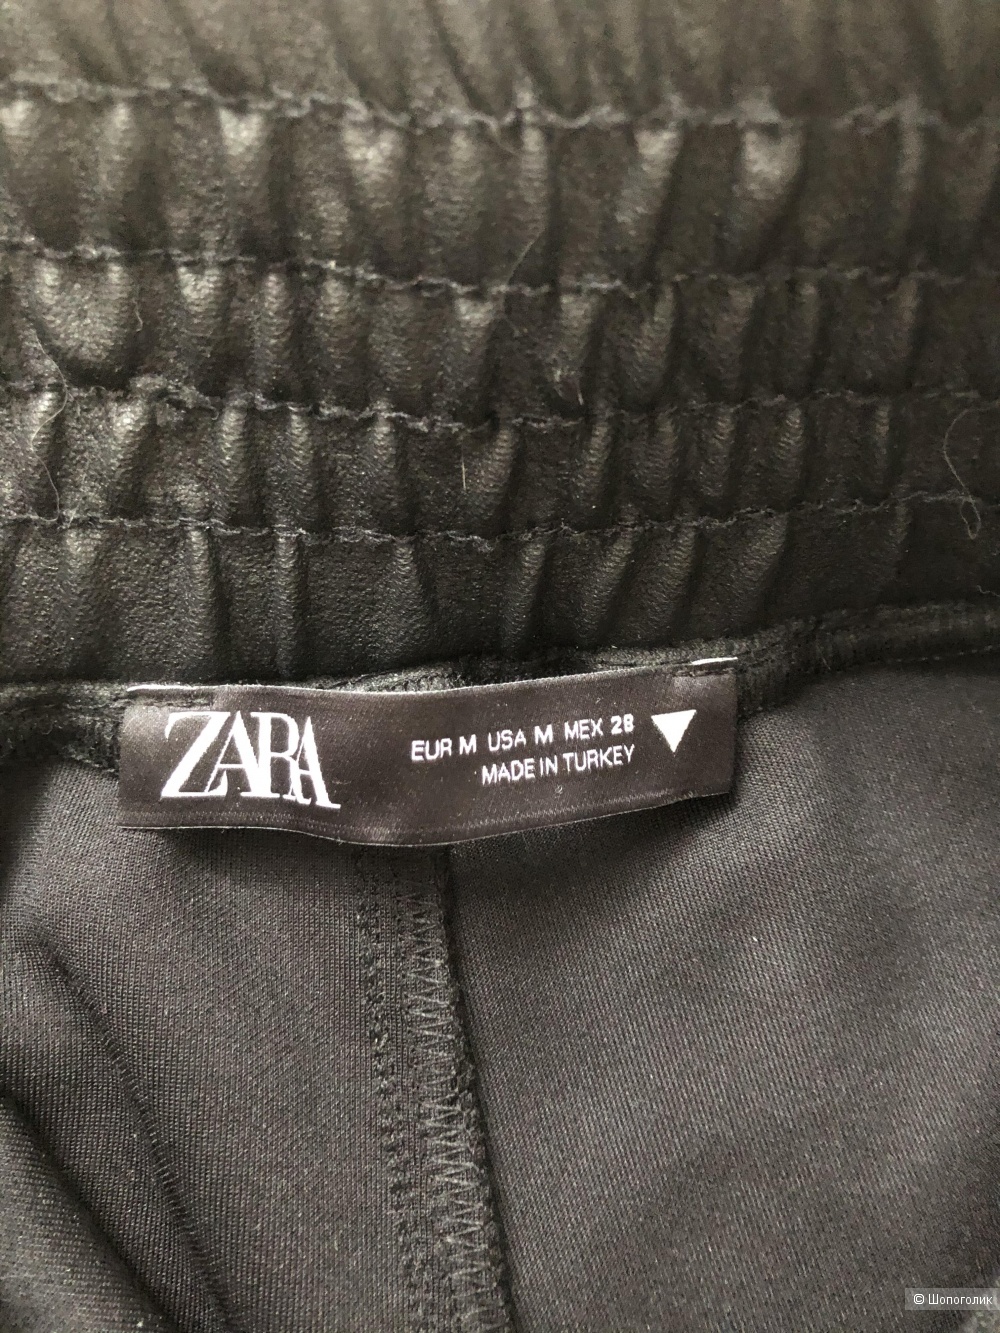 Брюки-джоггеры Zara, размер Eur M